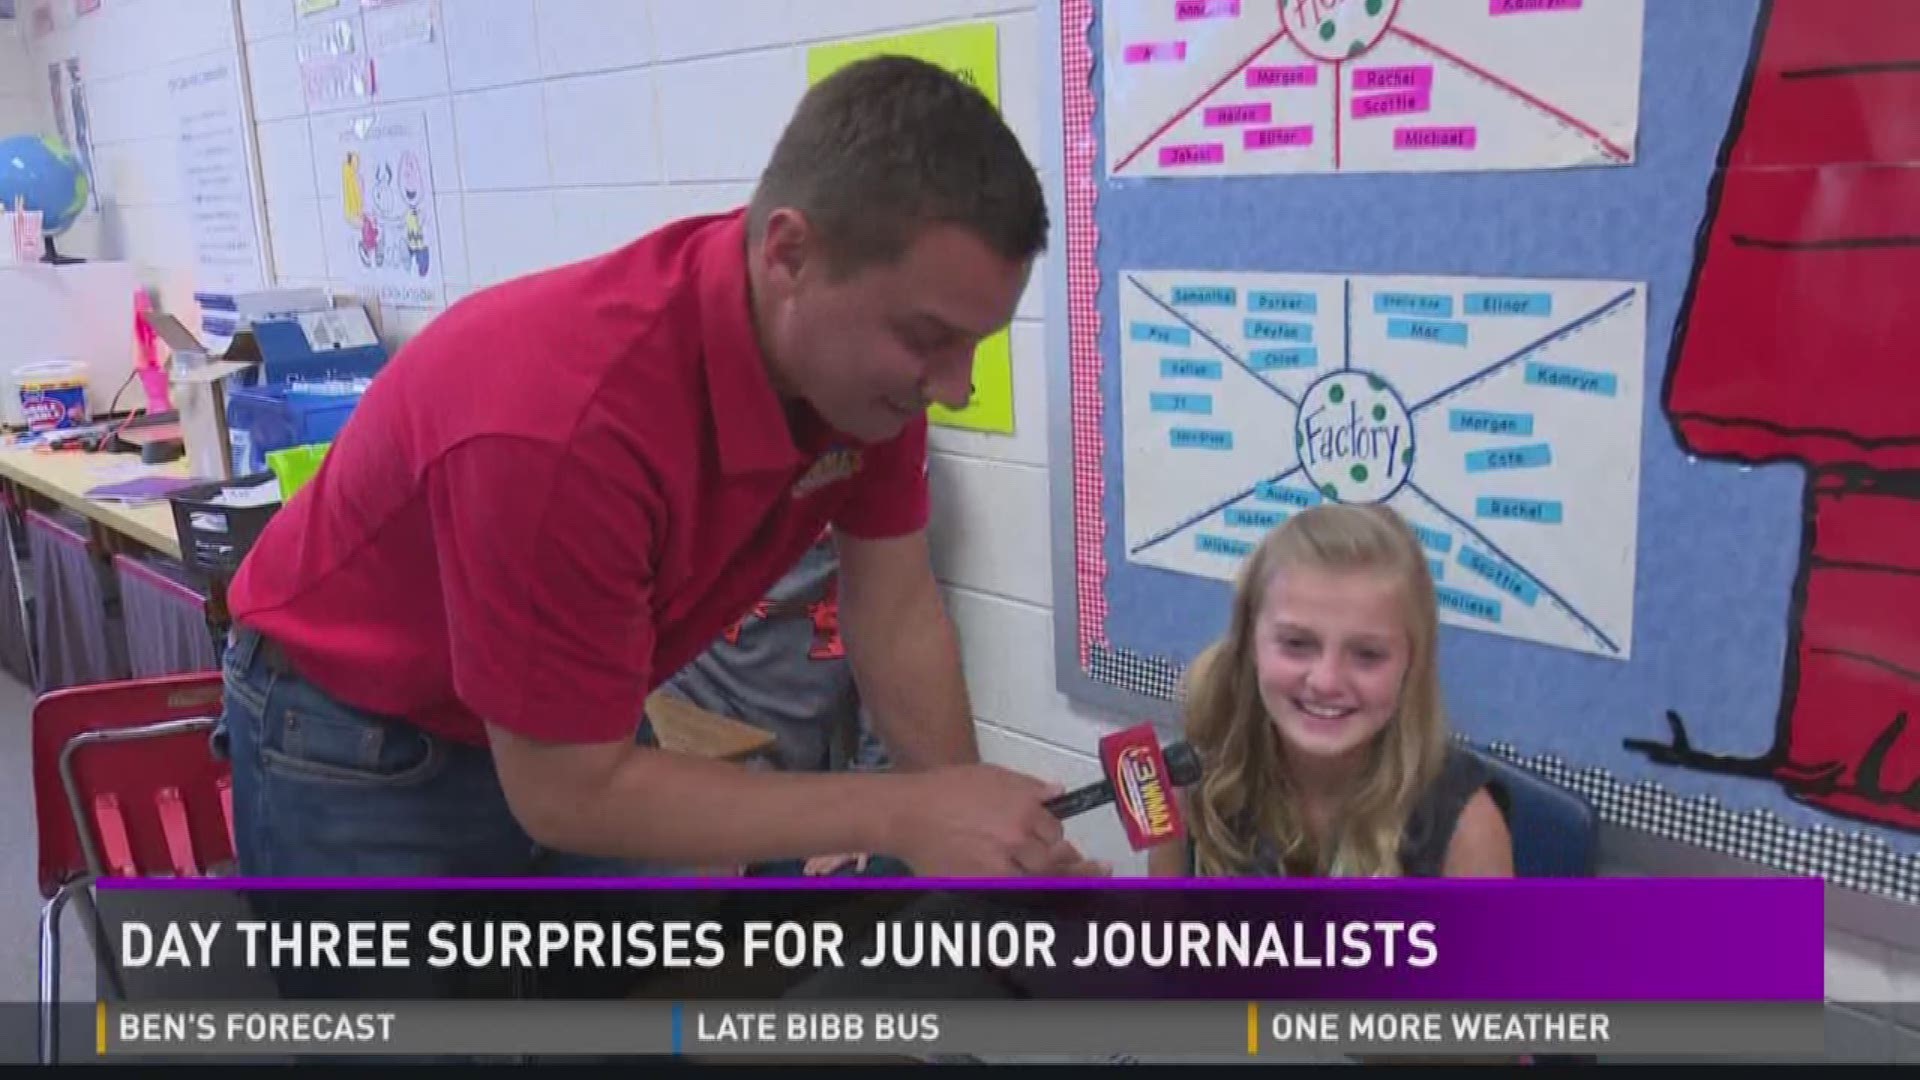 Day 3 surprises for Junior Journalists